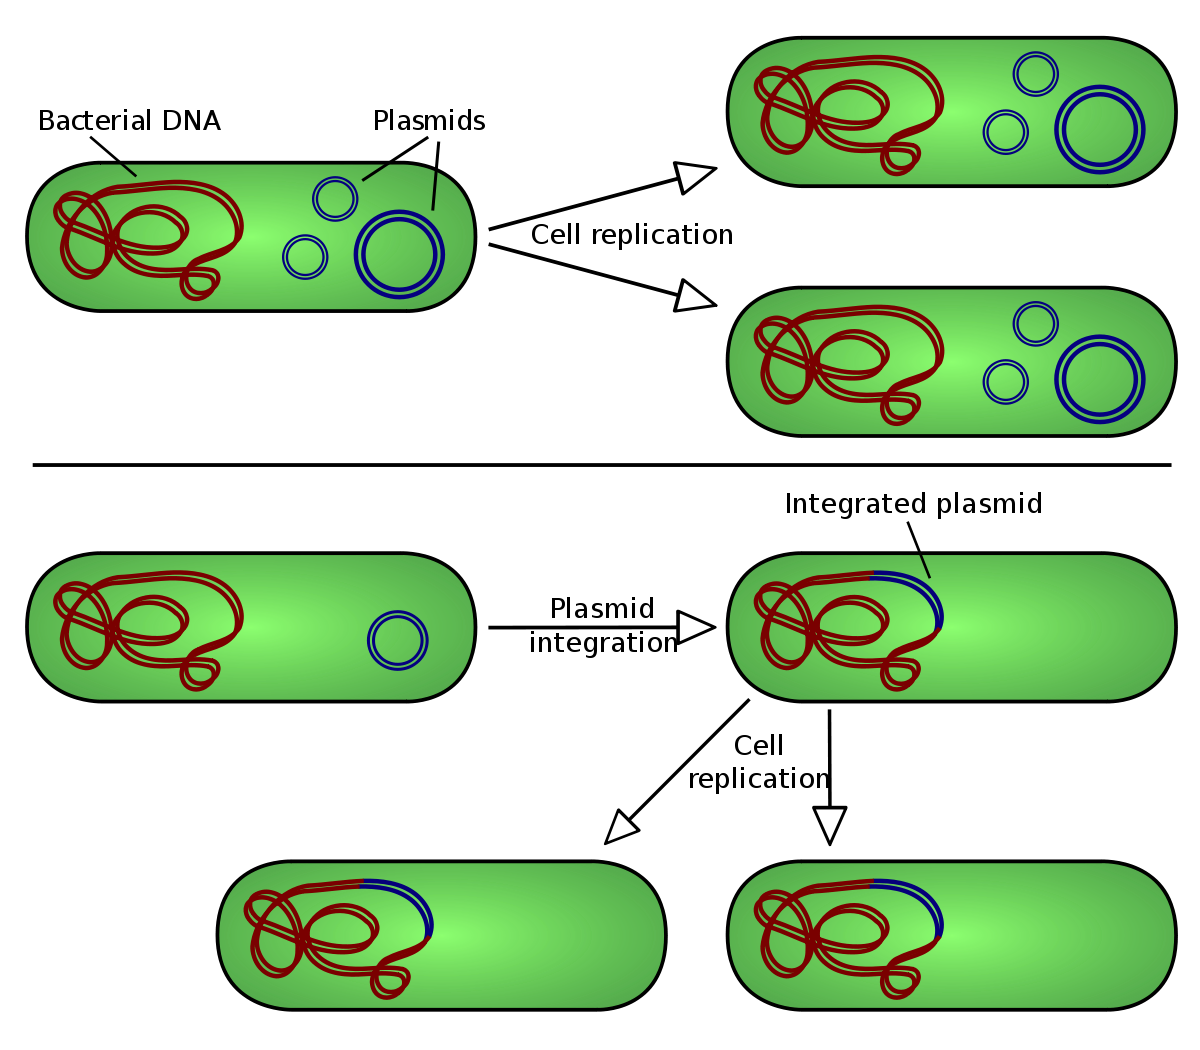 Гибридизация плазмид. Плазмиды бактерии репликации. Плазмидная ДНК бактерий. Плазмиды и эписомы. Репликация плазмид бактерий.